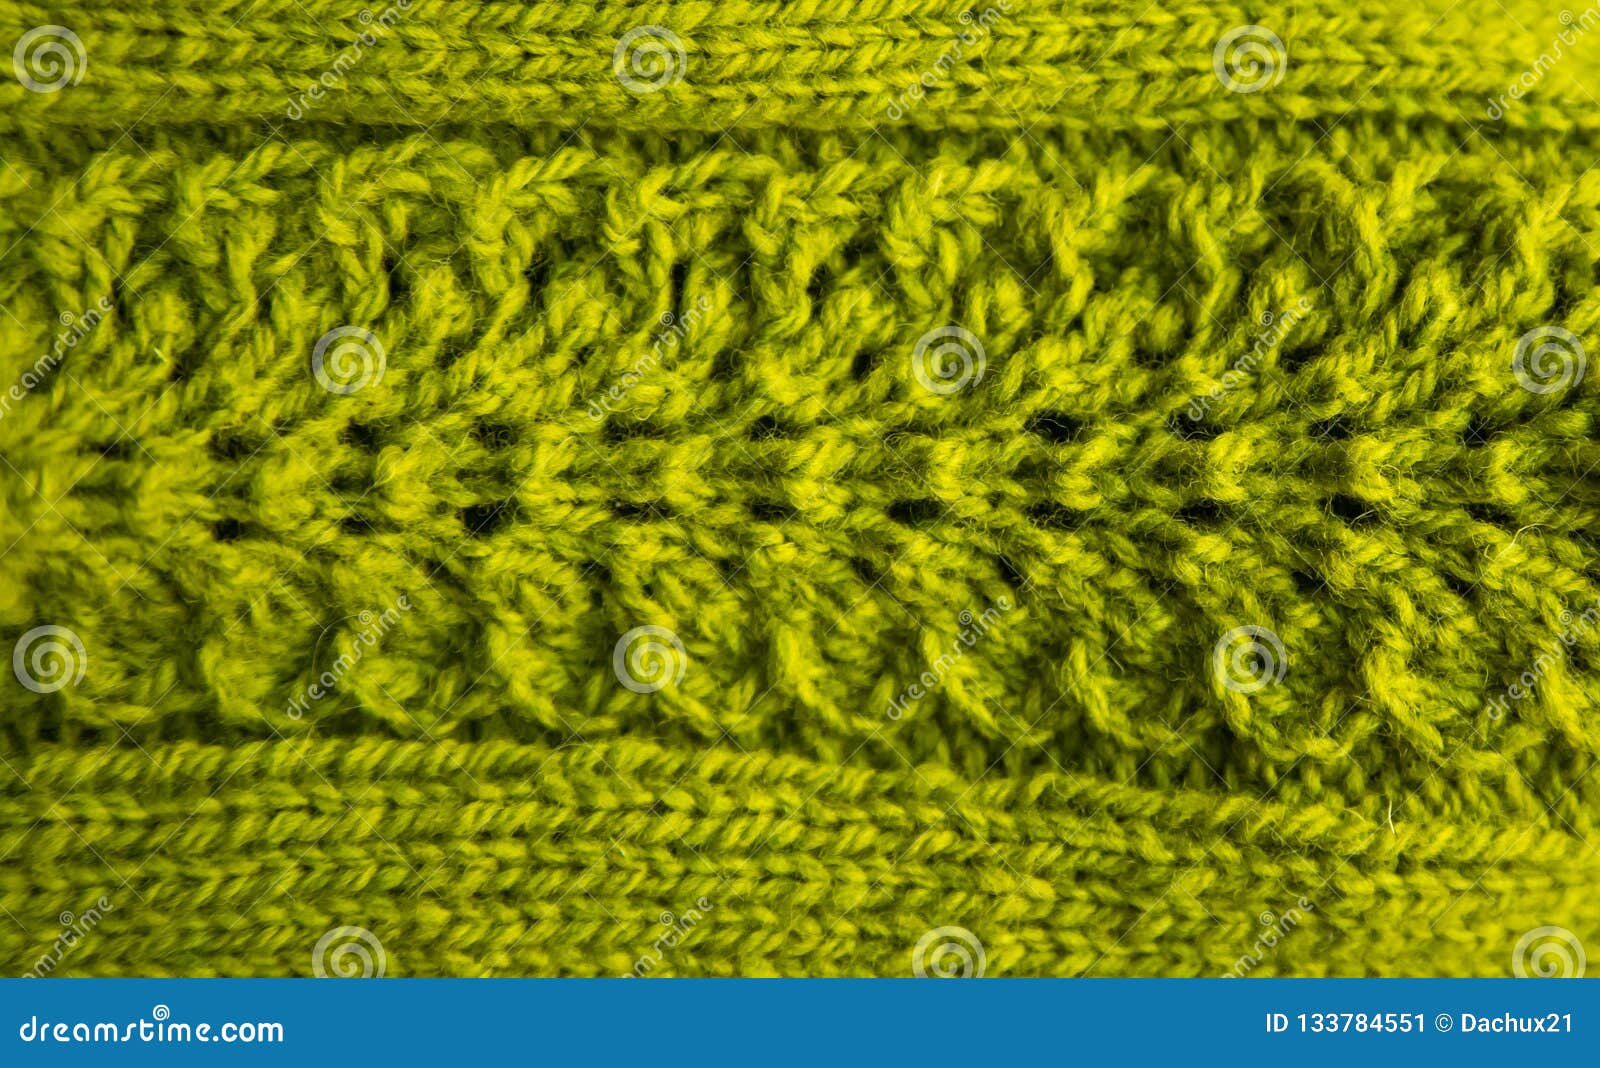 A Beautiful Closeup Of A Warm Knitted Pattern Natural Sheep